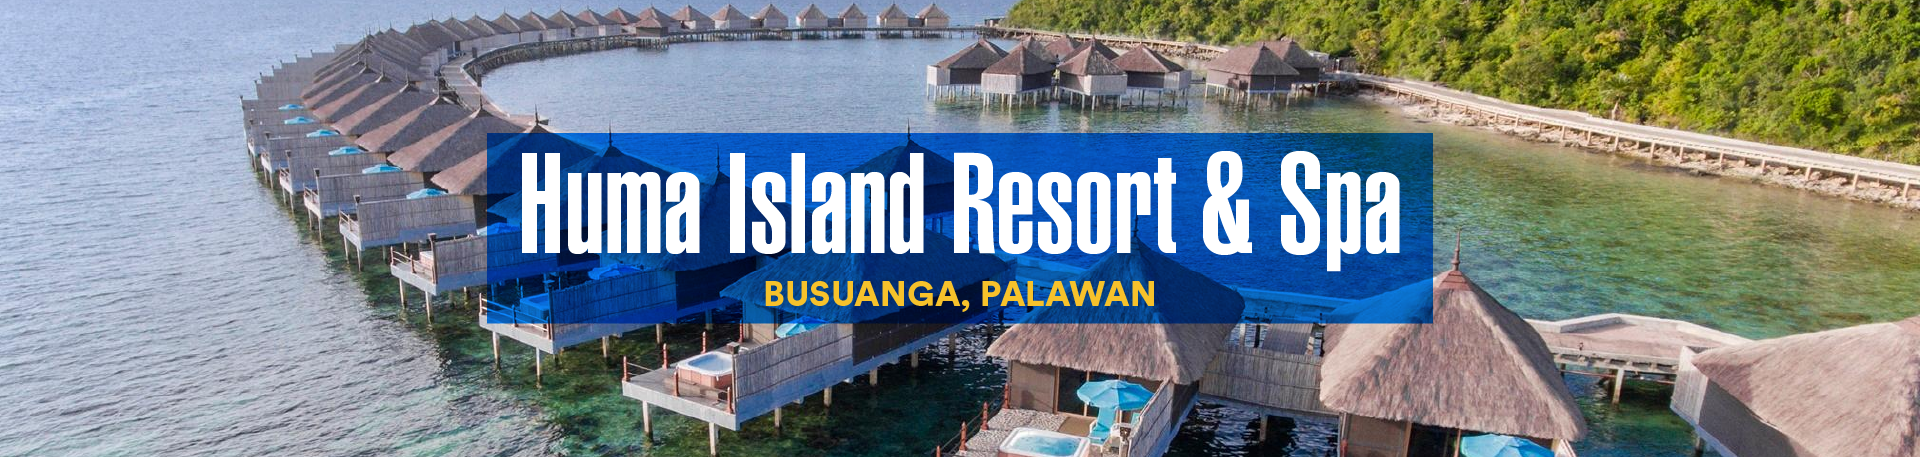 Huma Island Resort & Spa. Busuanga, Palawan